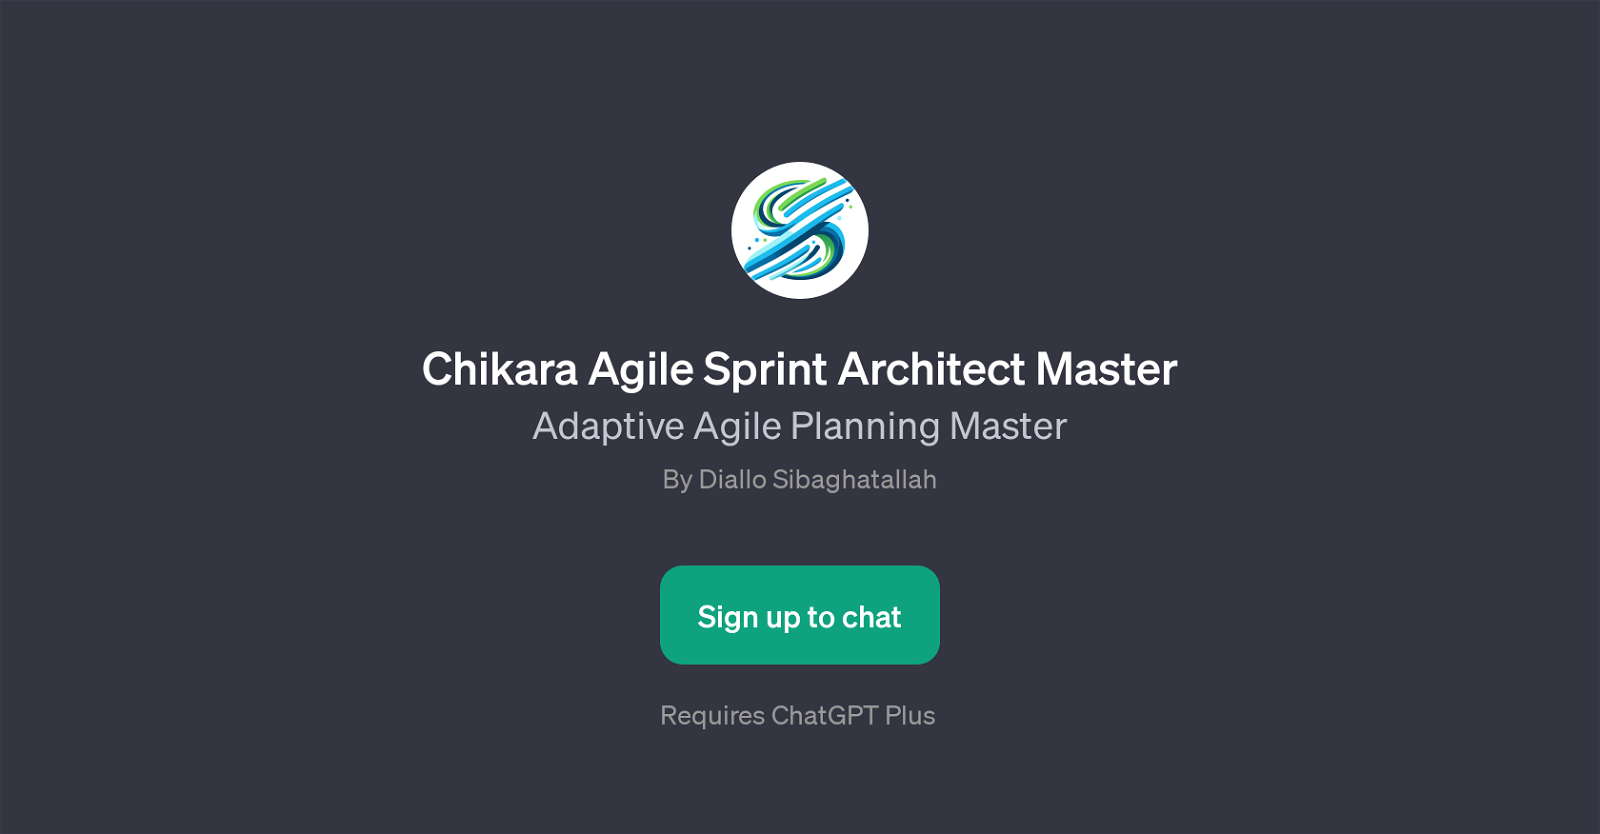 Chikara Agile Sprint Architect Master website